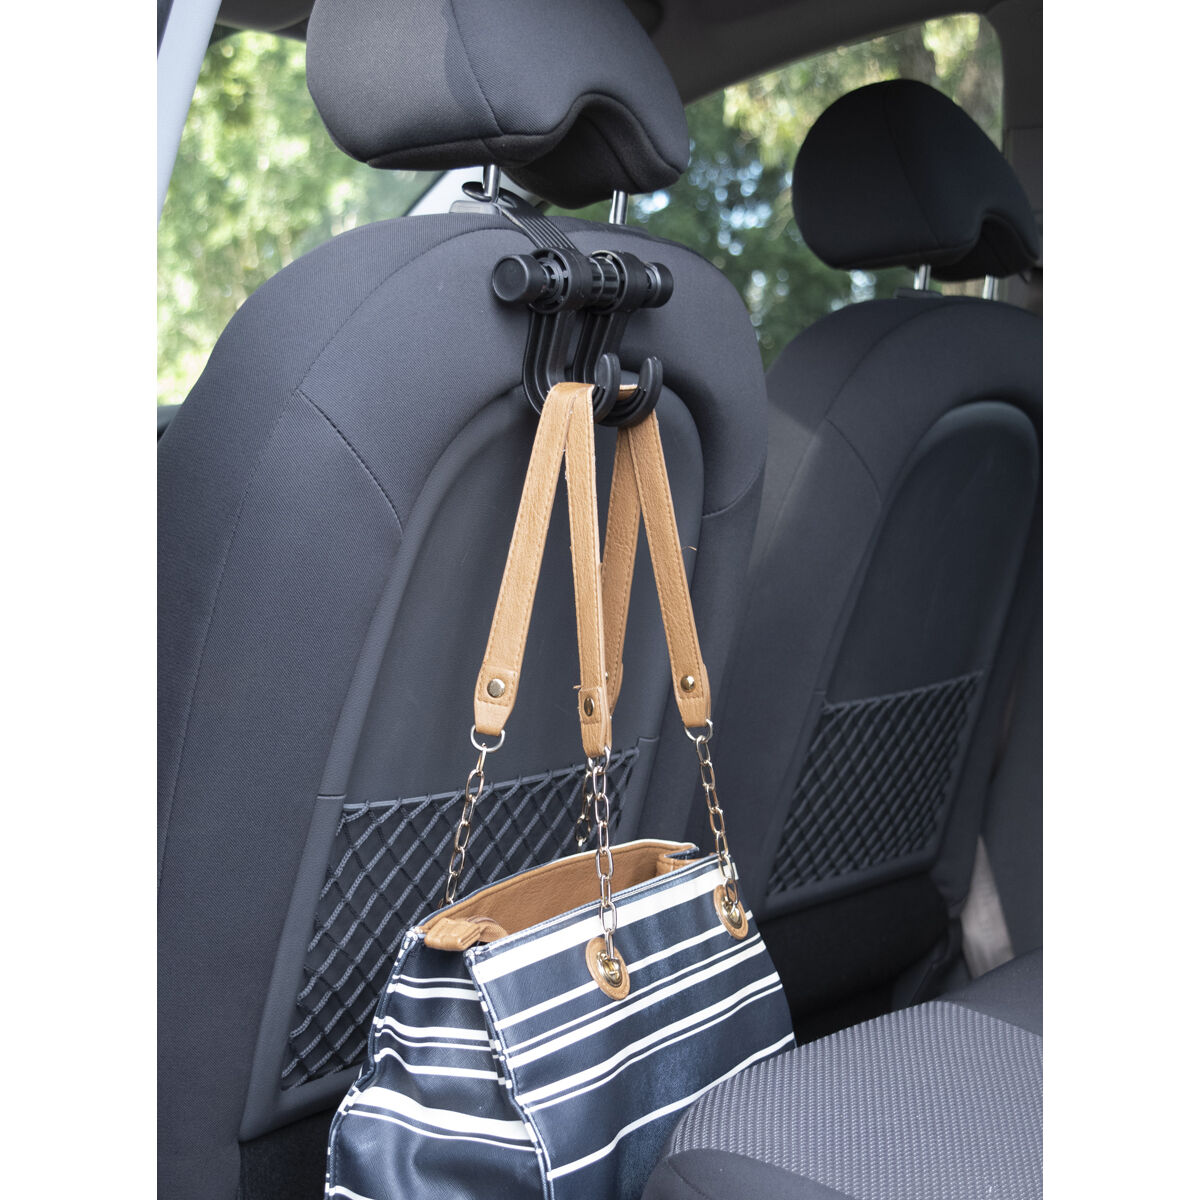 4-Pcs Car Hooks, Bling Car Hangers Seat Headrest Hooks Universal Backseat  Hanger Back Seat Holder for Bag Purse Cloth Groceries Coat, Green :  Amazon.co.uk: Automotive